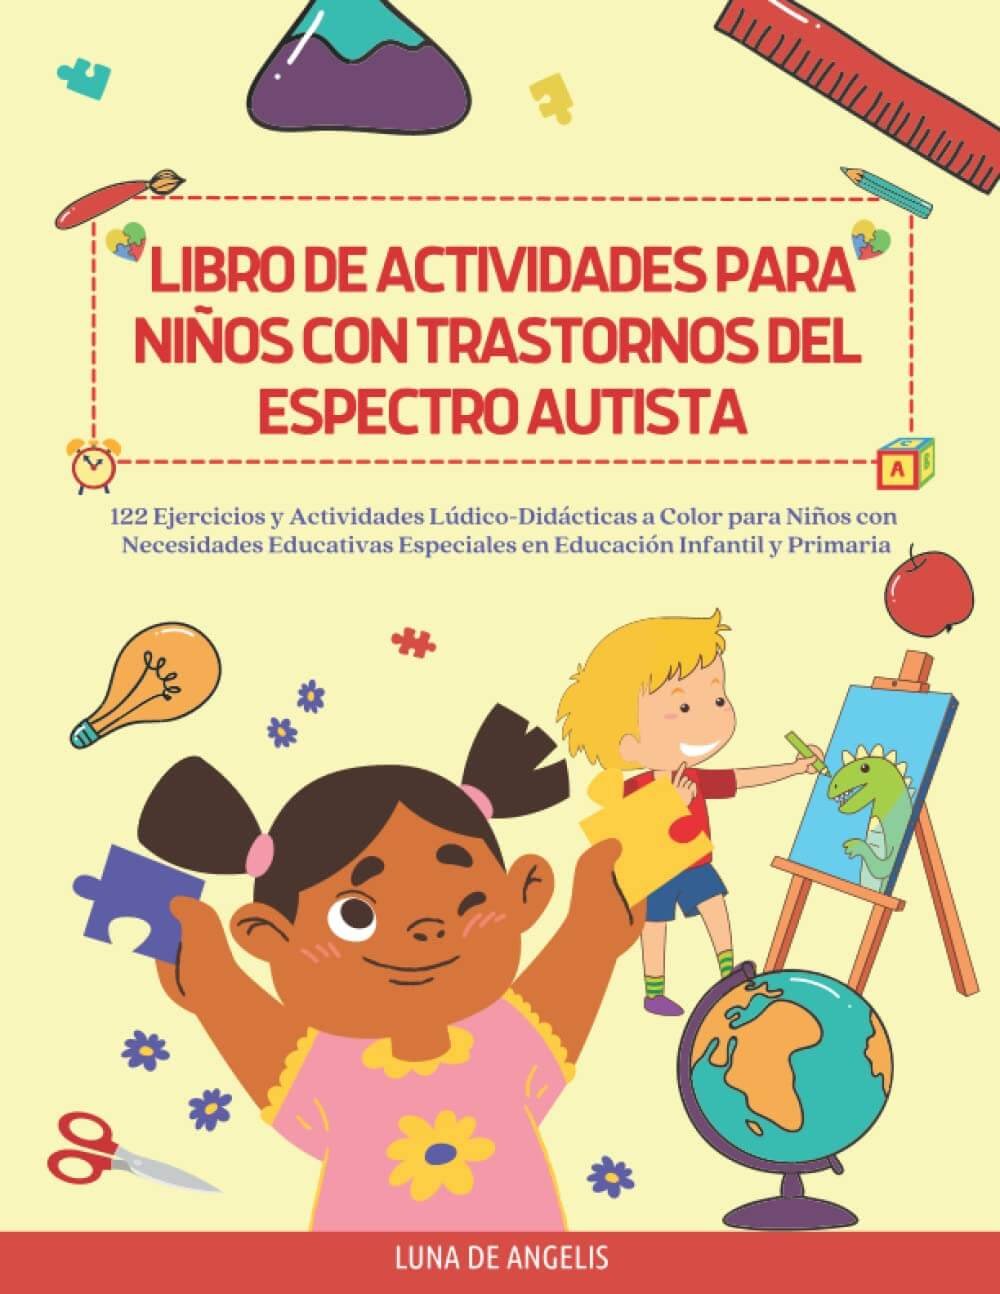 Libro de actividades para niños con autismo